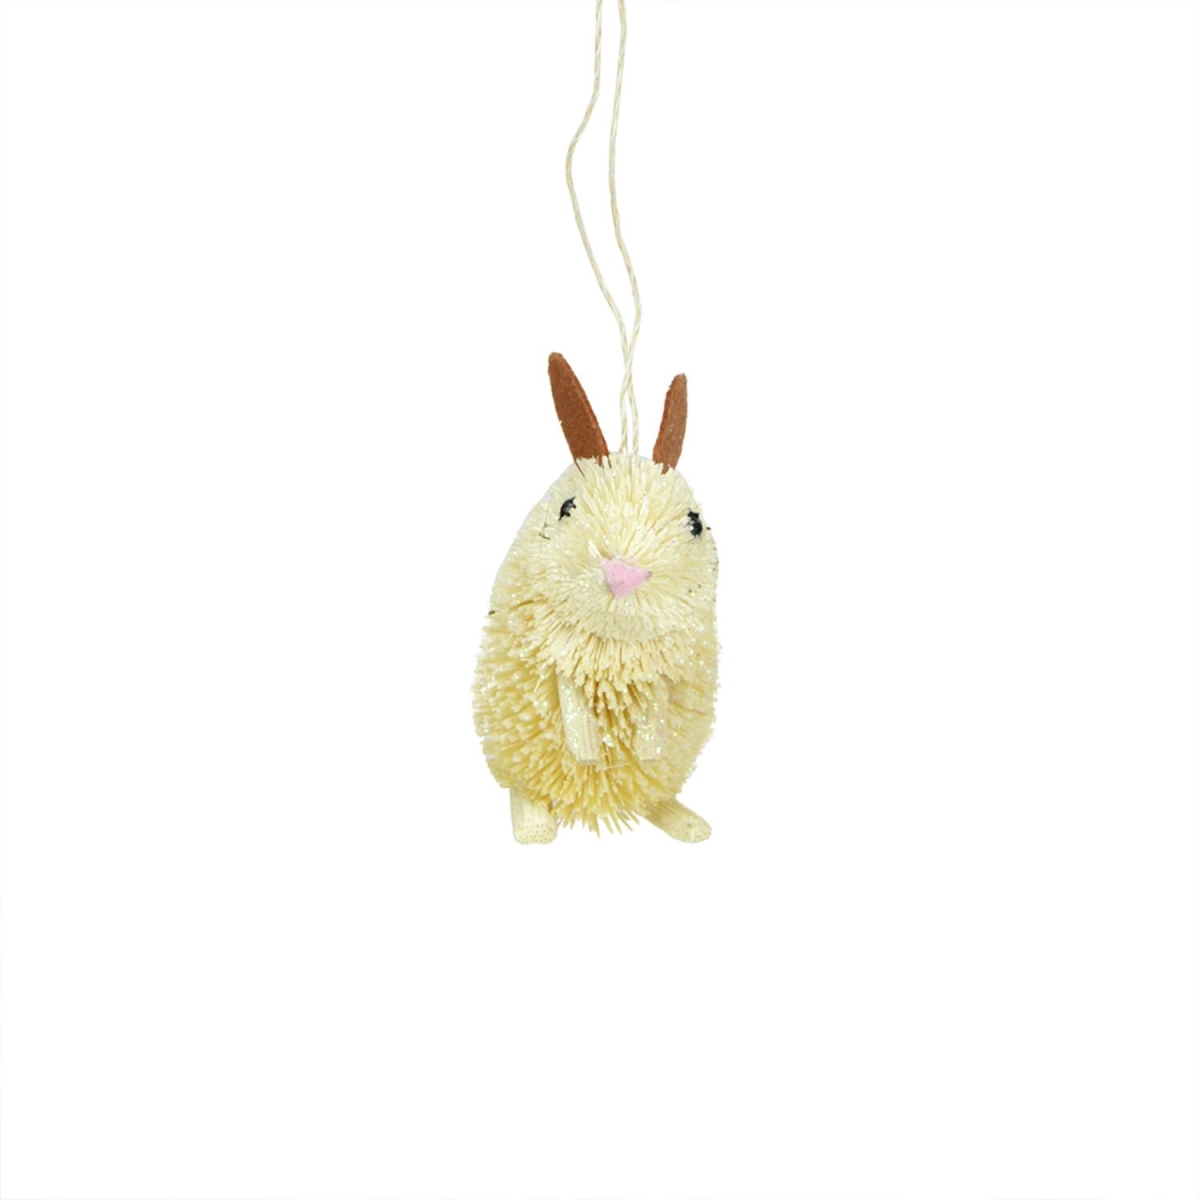 31421212 3 In. Storybook Garden Bristled Sandy Brown Bunny Rabbit Christmas Figure Ornament